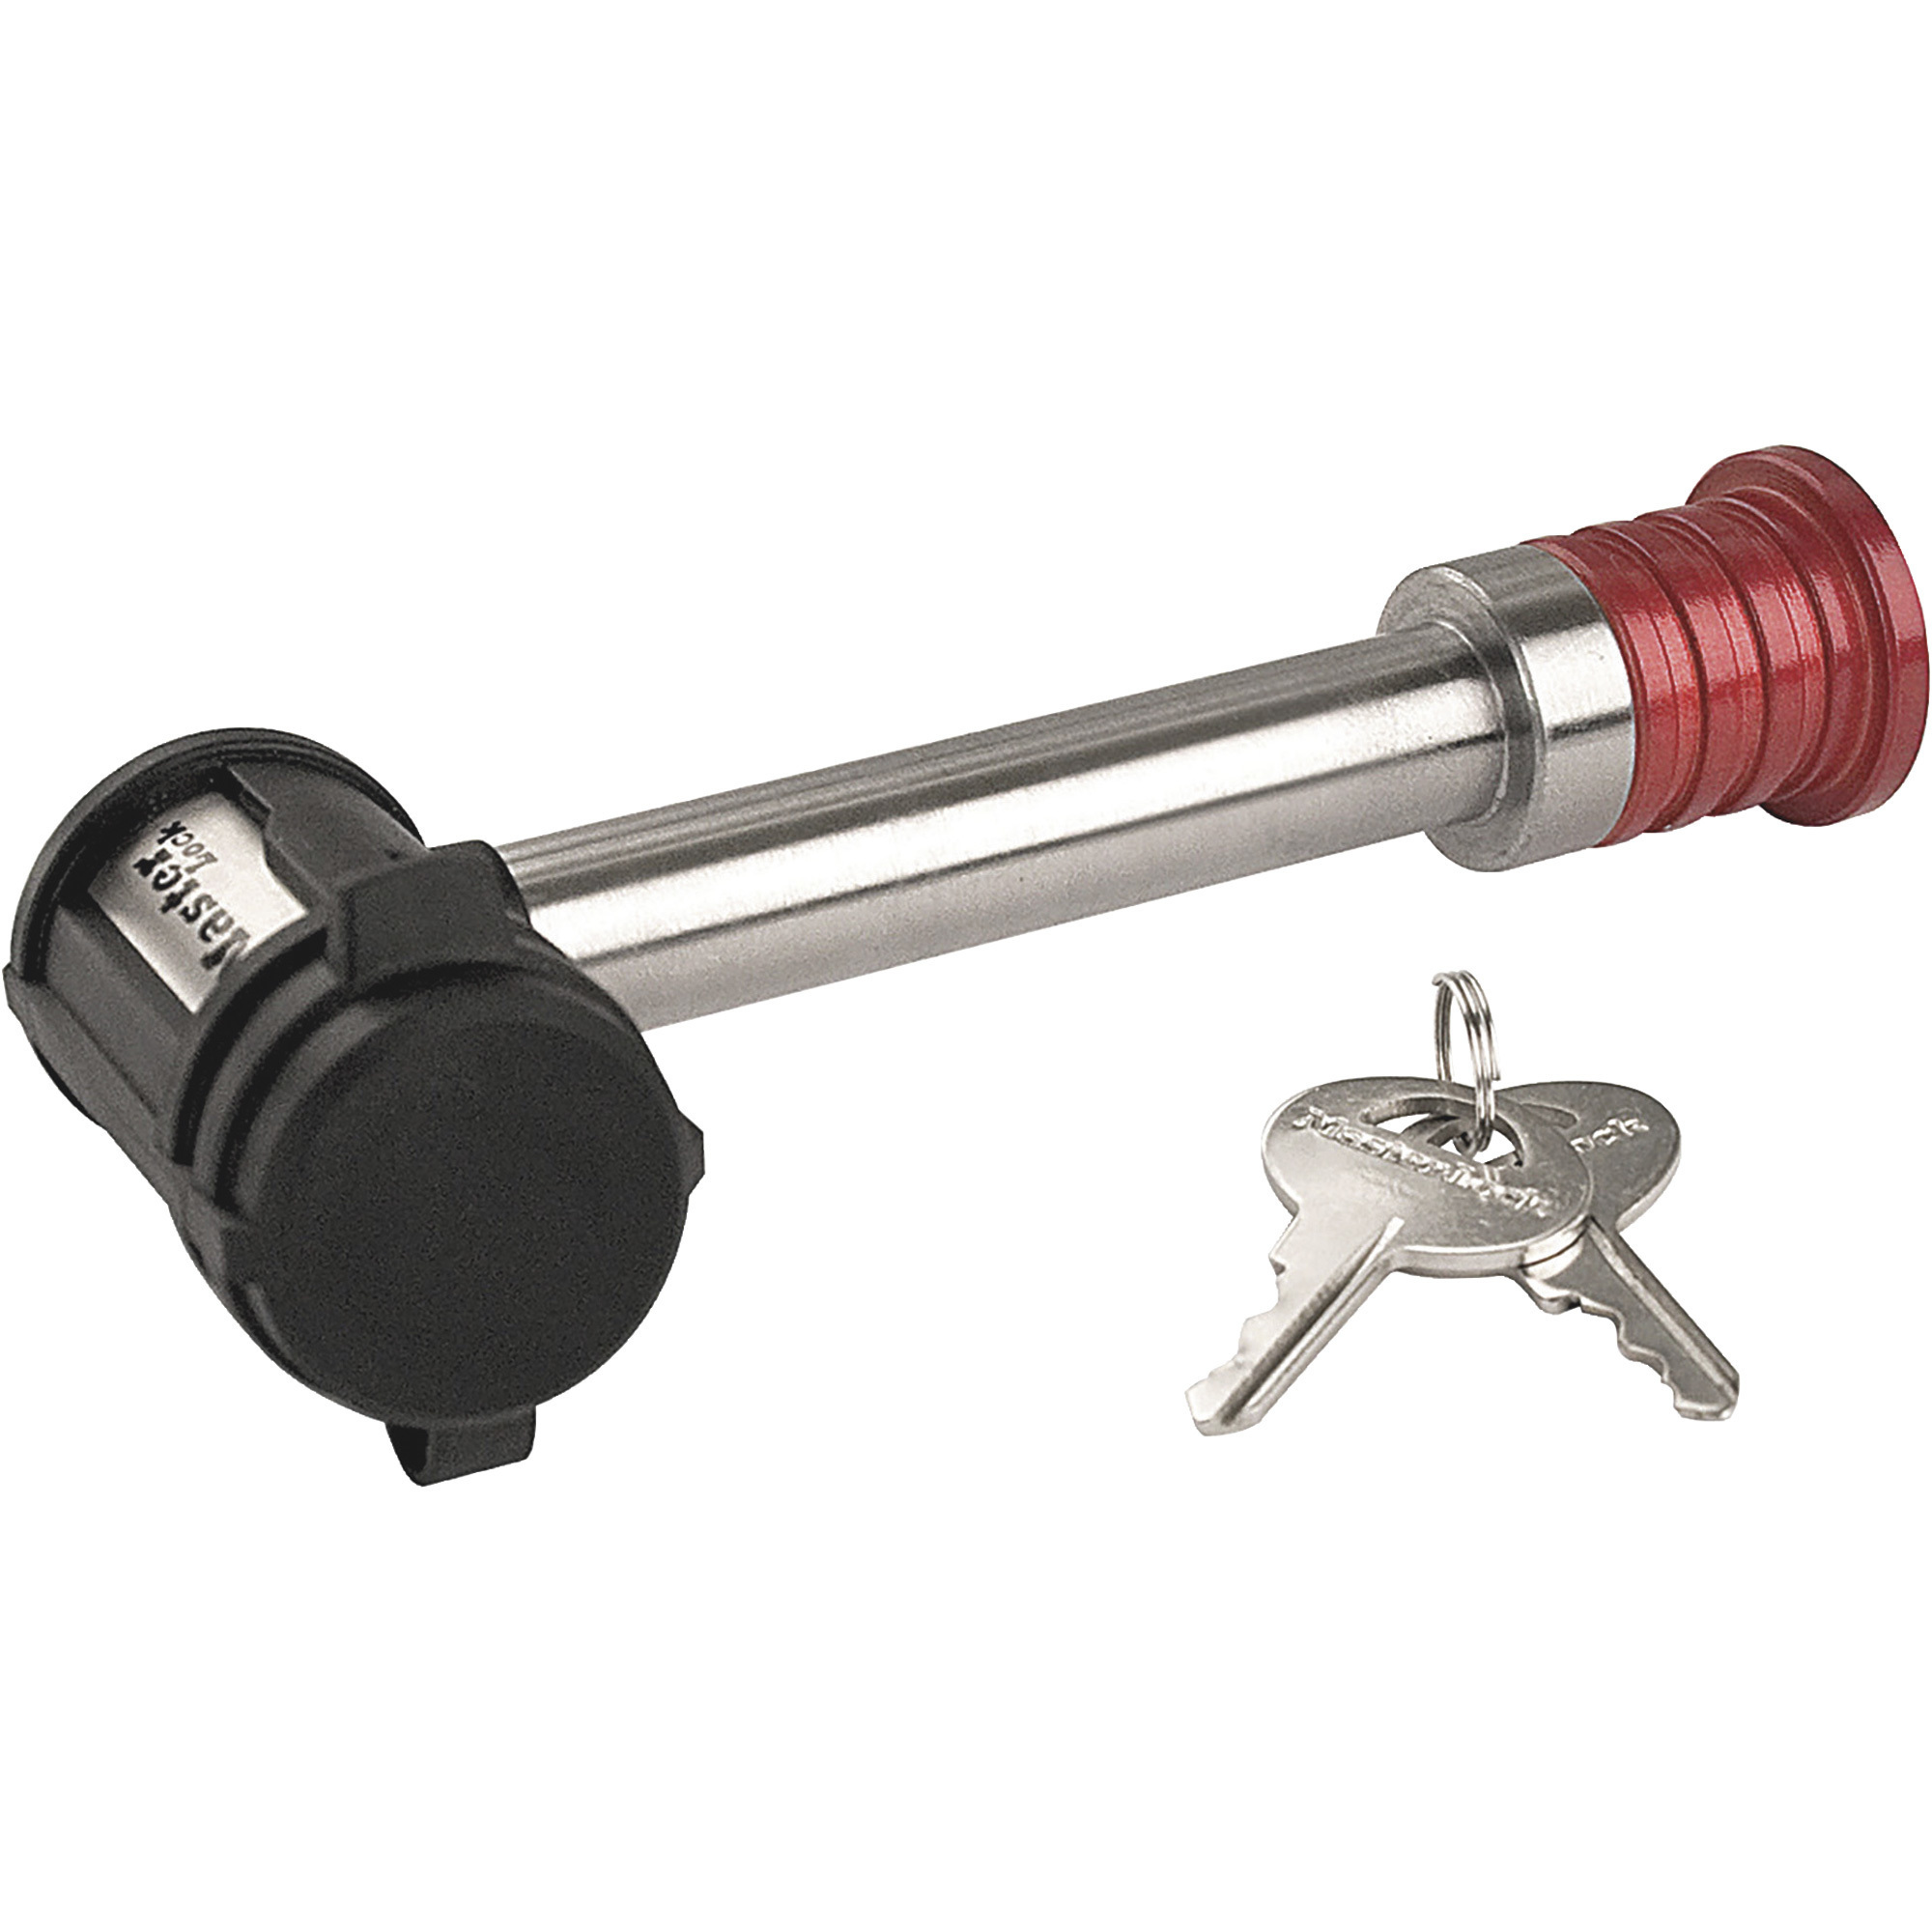 Master Lock Barbell Extended Length Receiver Lock â 5/8Inch (16mm), Class III/IV, Model 1469DAT